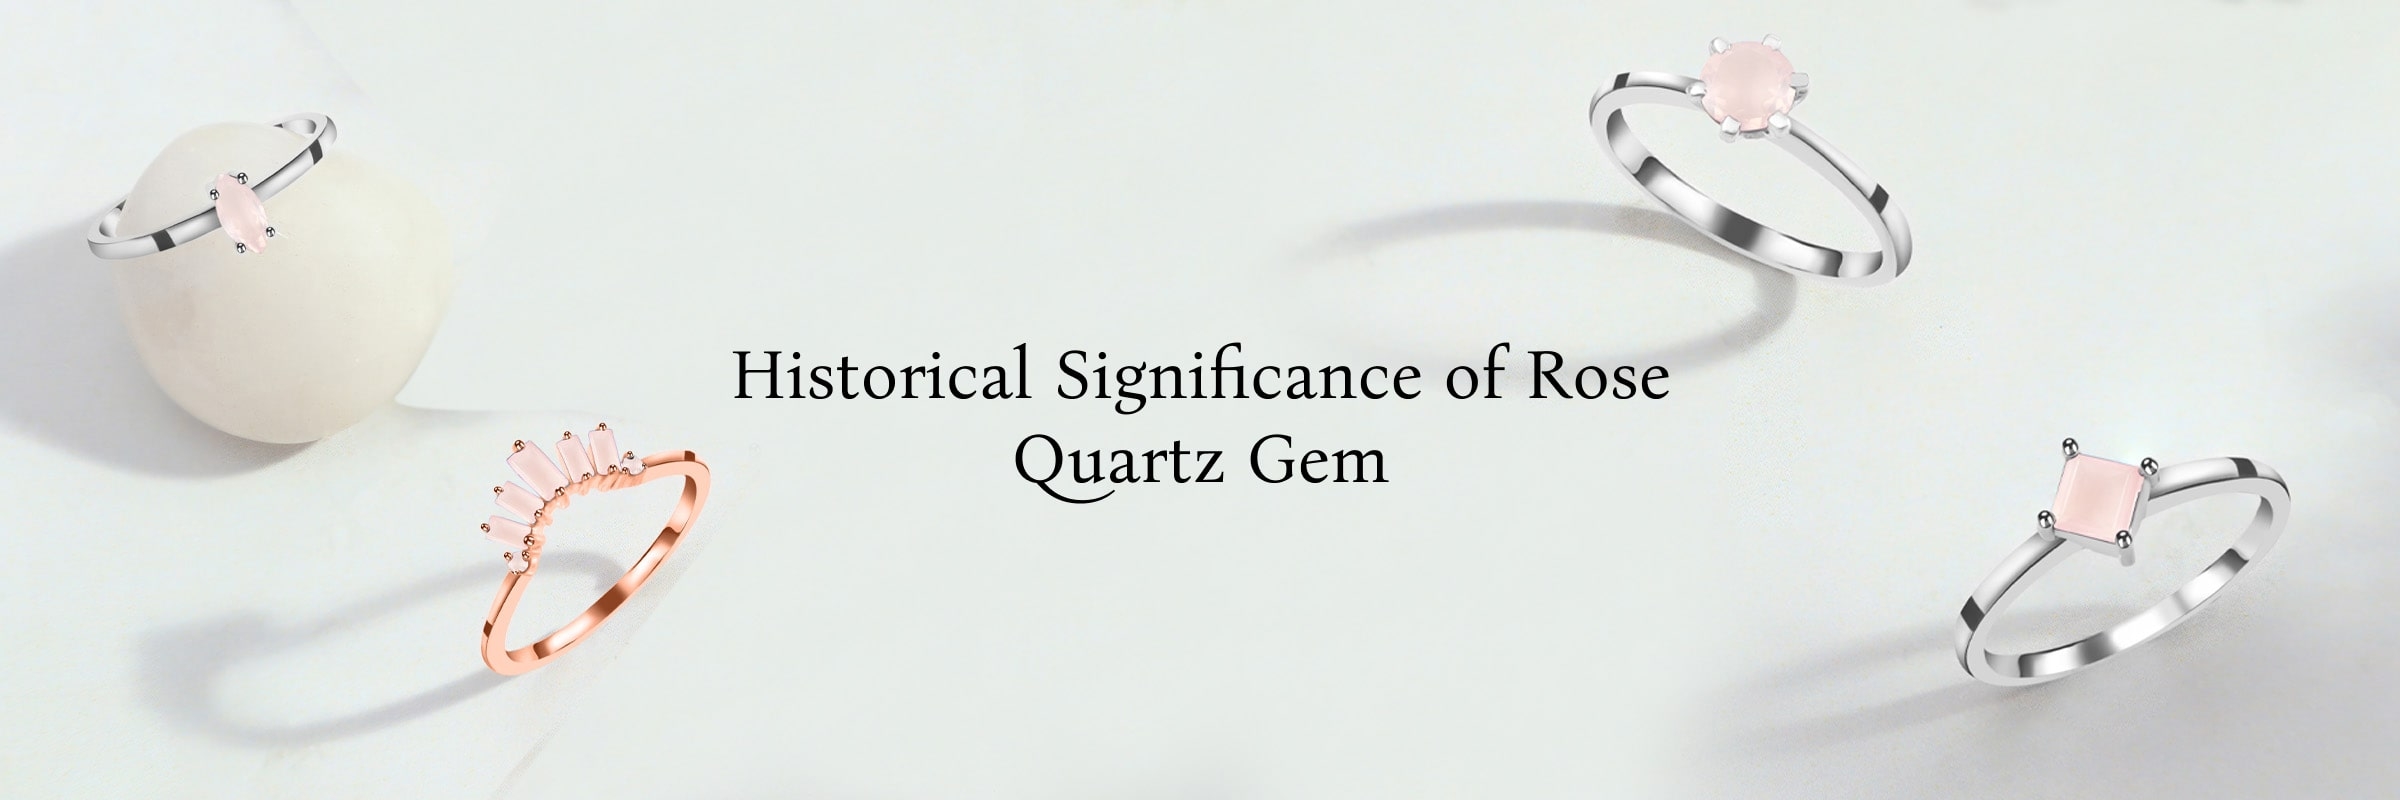 Rose Quartz History